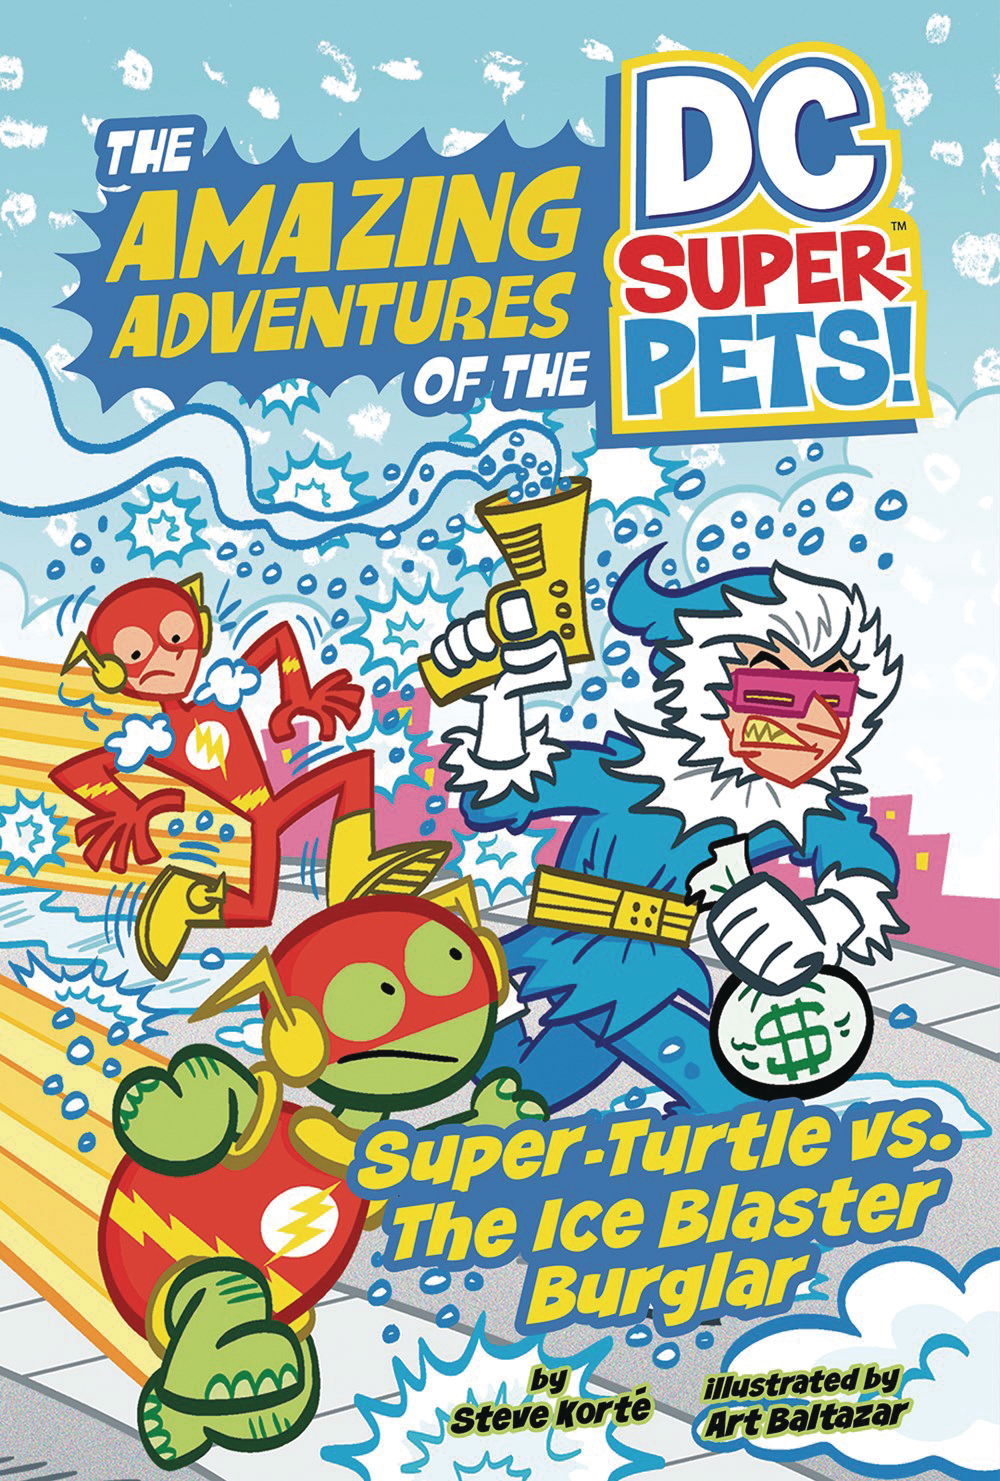 DC Super Pets Whatzit Vs Ice Blaster Burglar